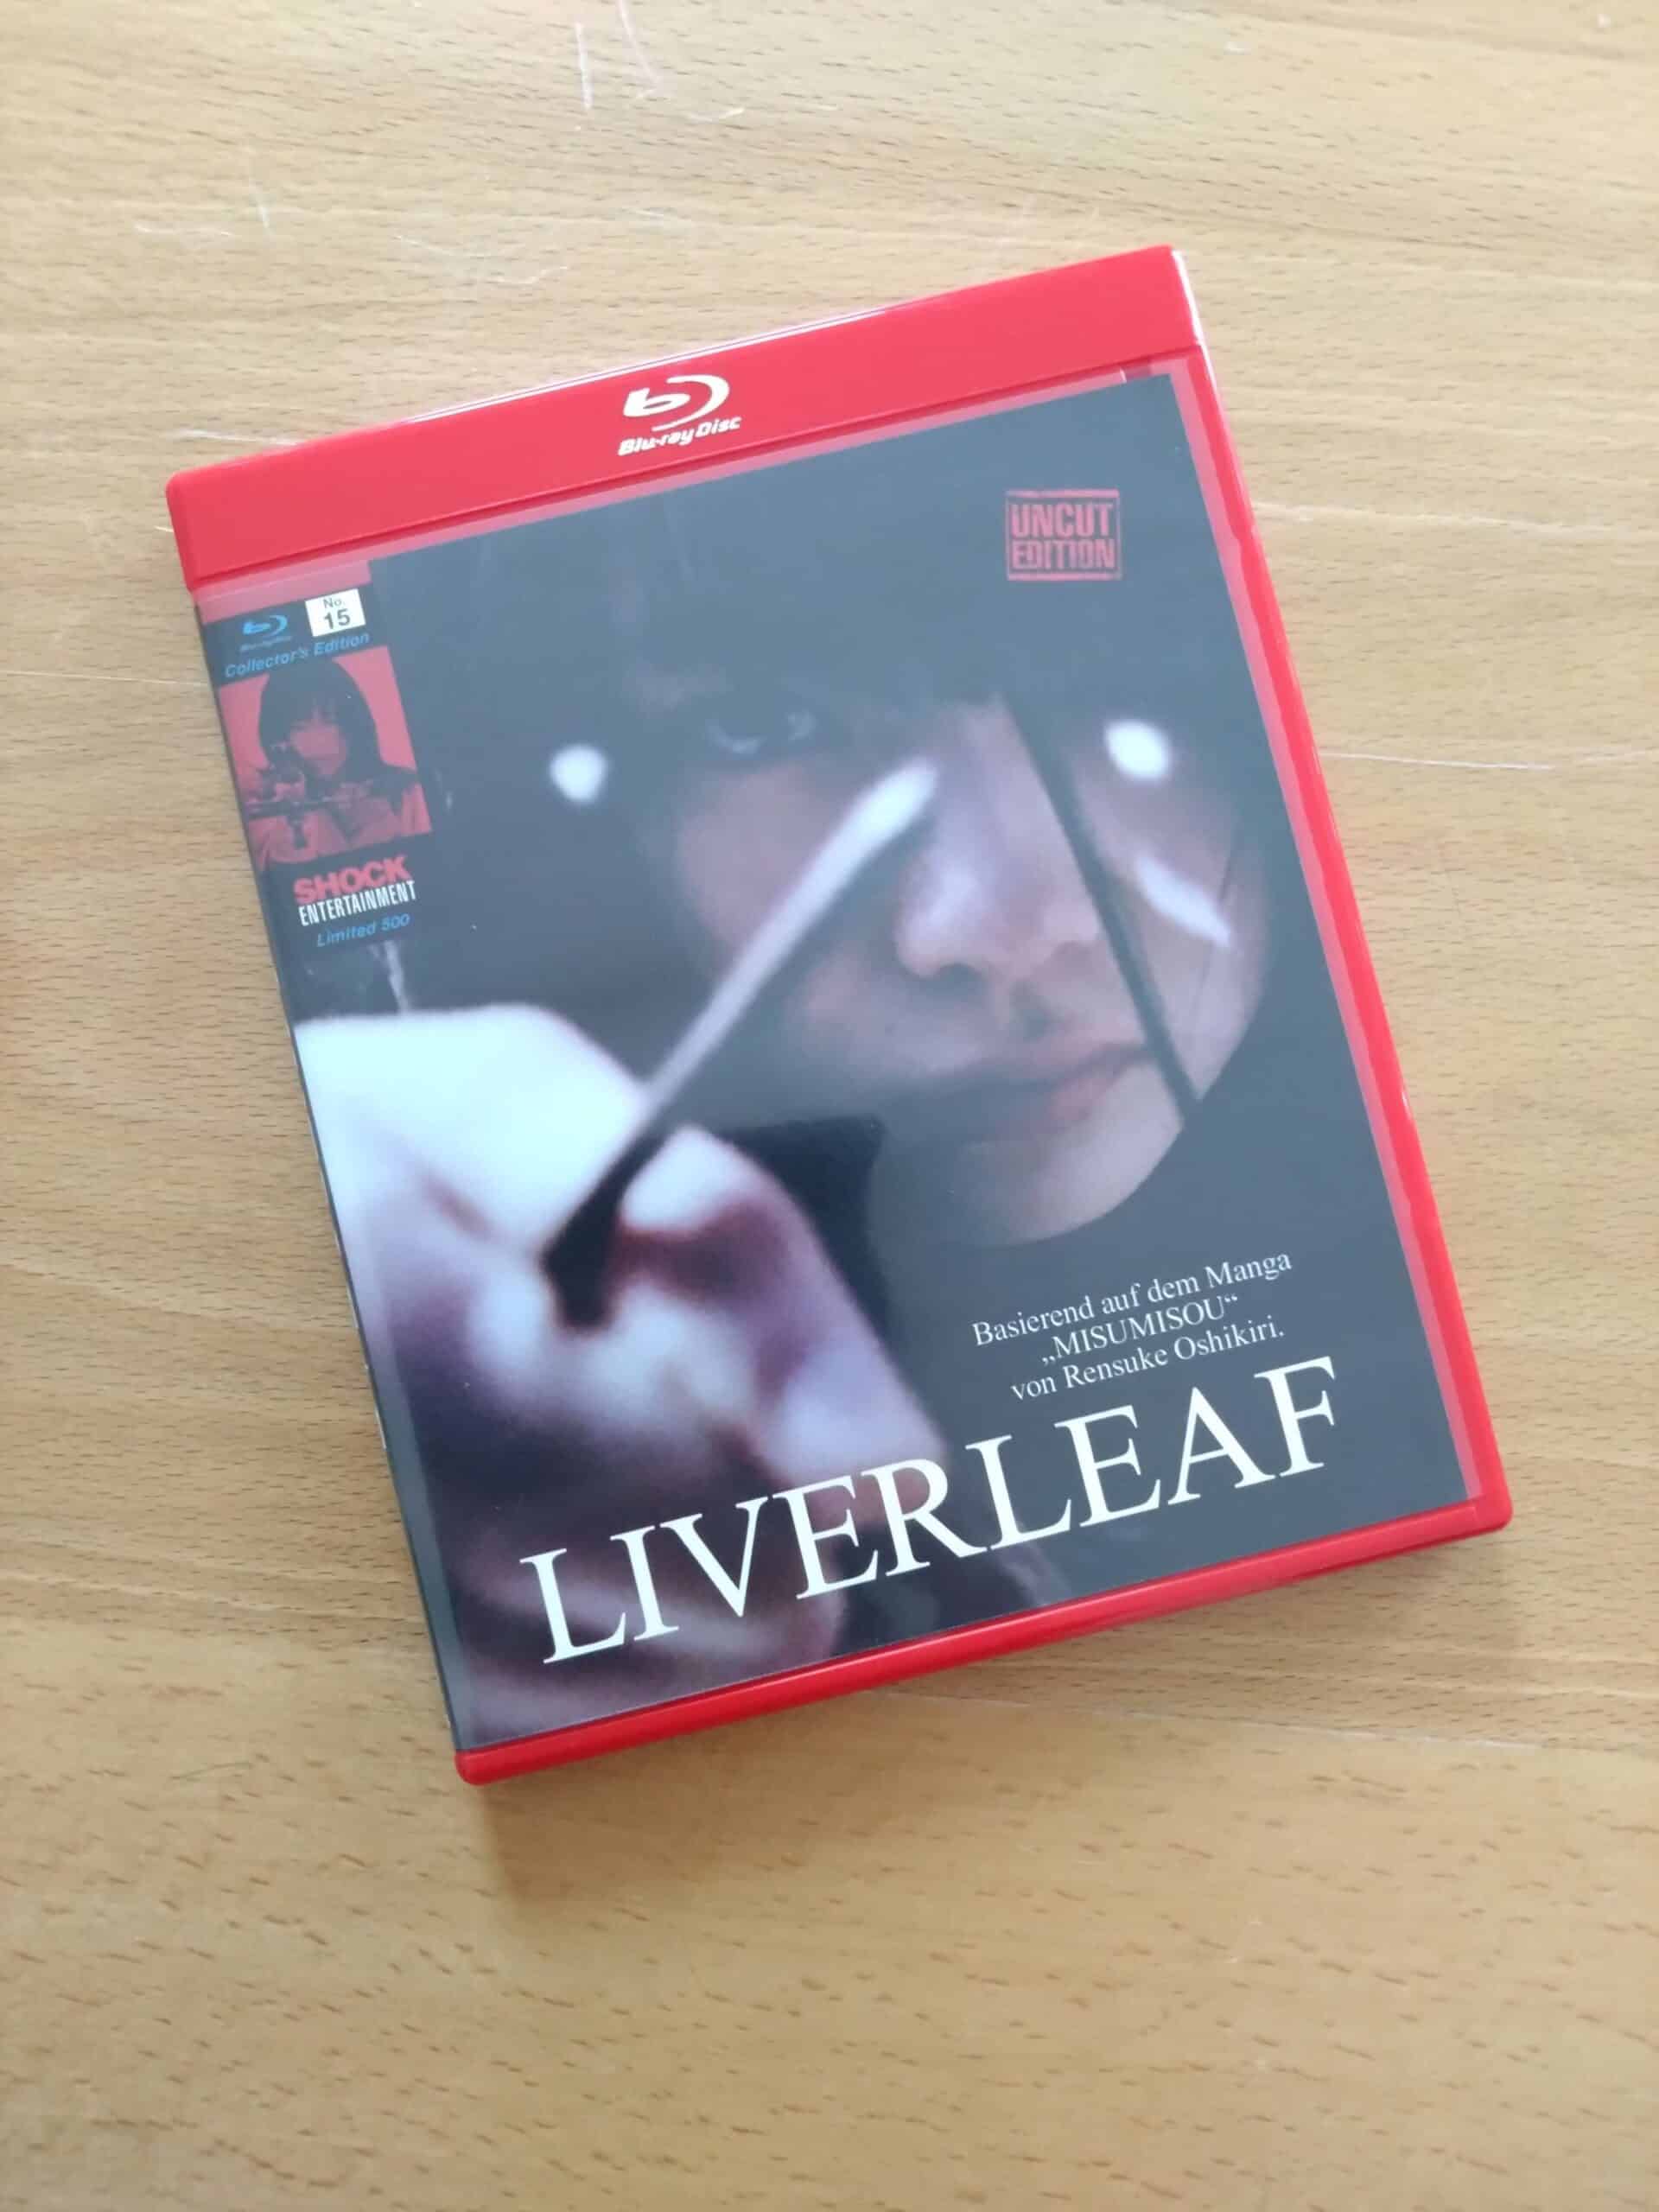 [Review] Liverleaf Blu-ray Amaray